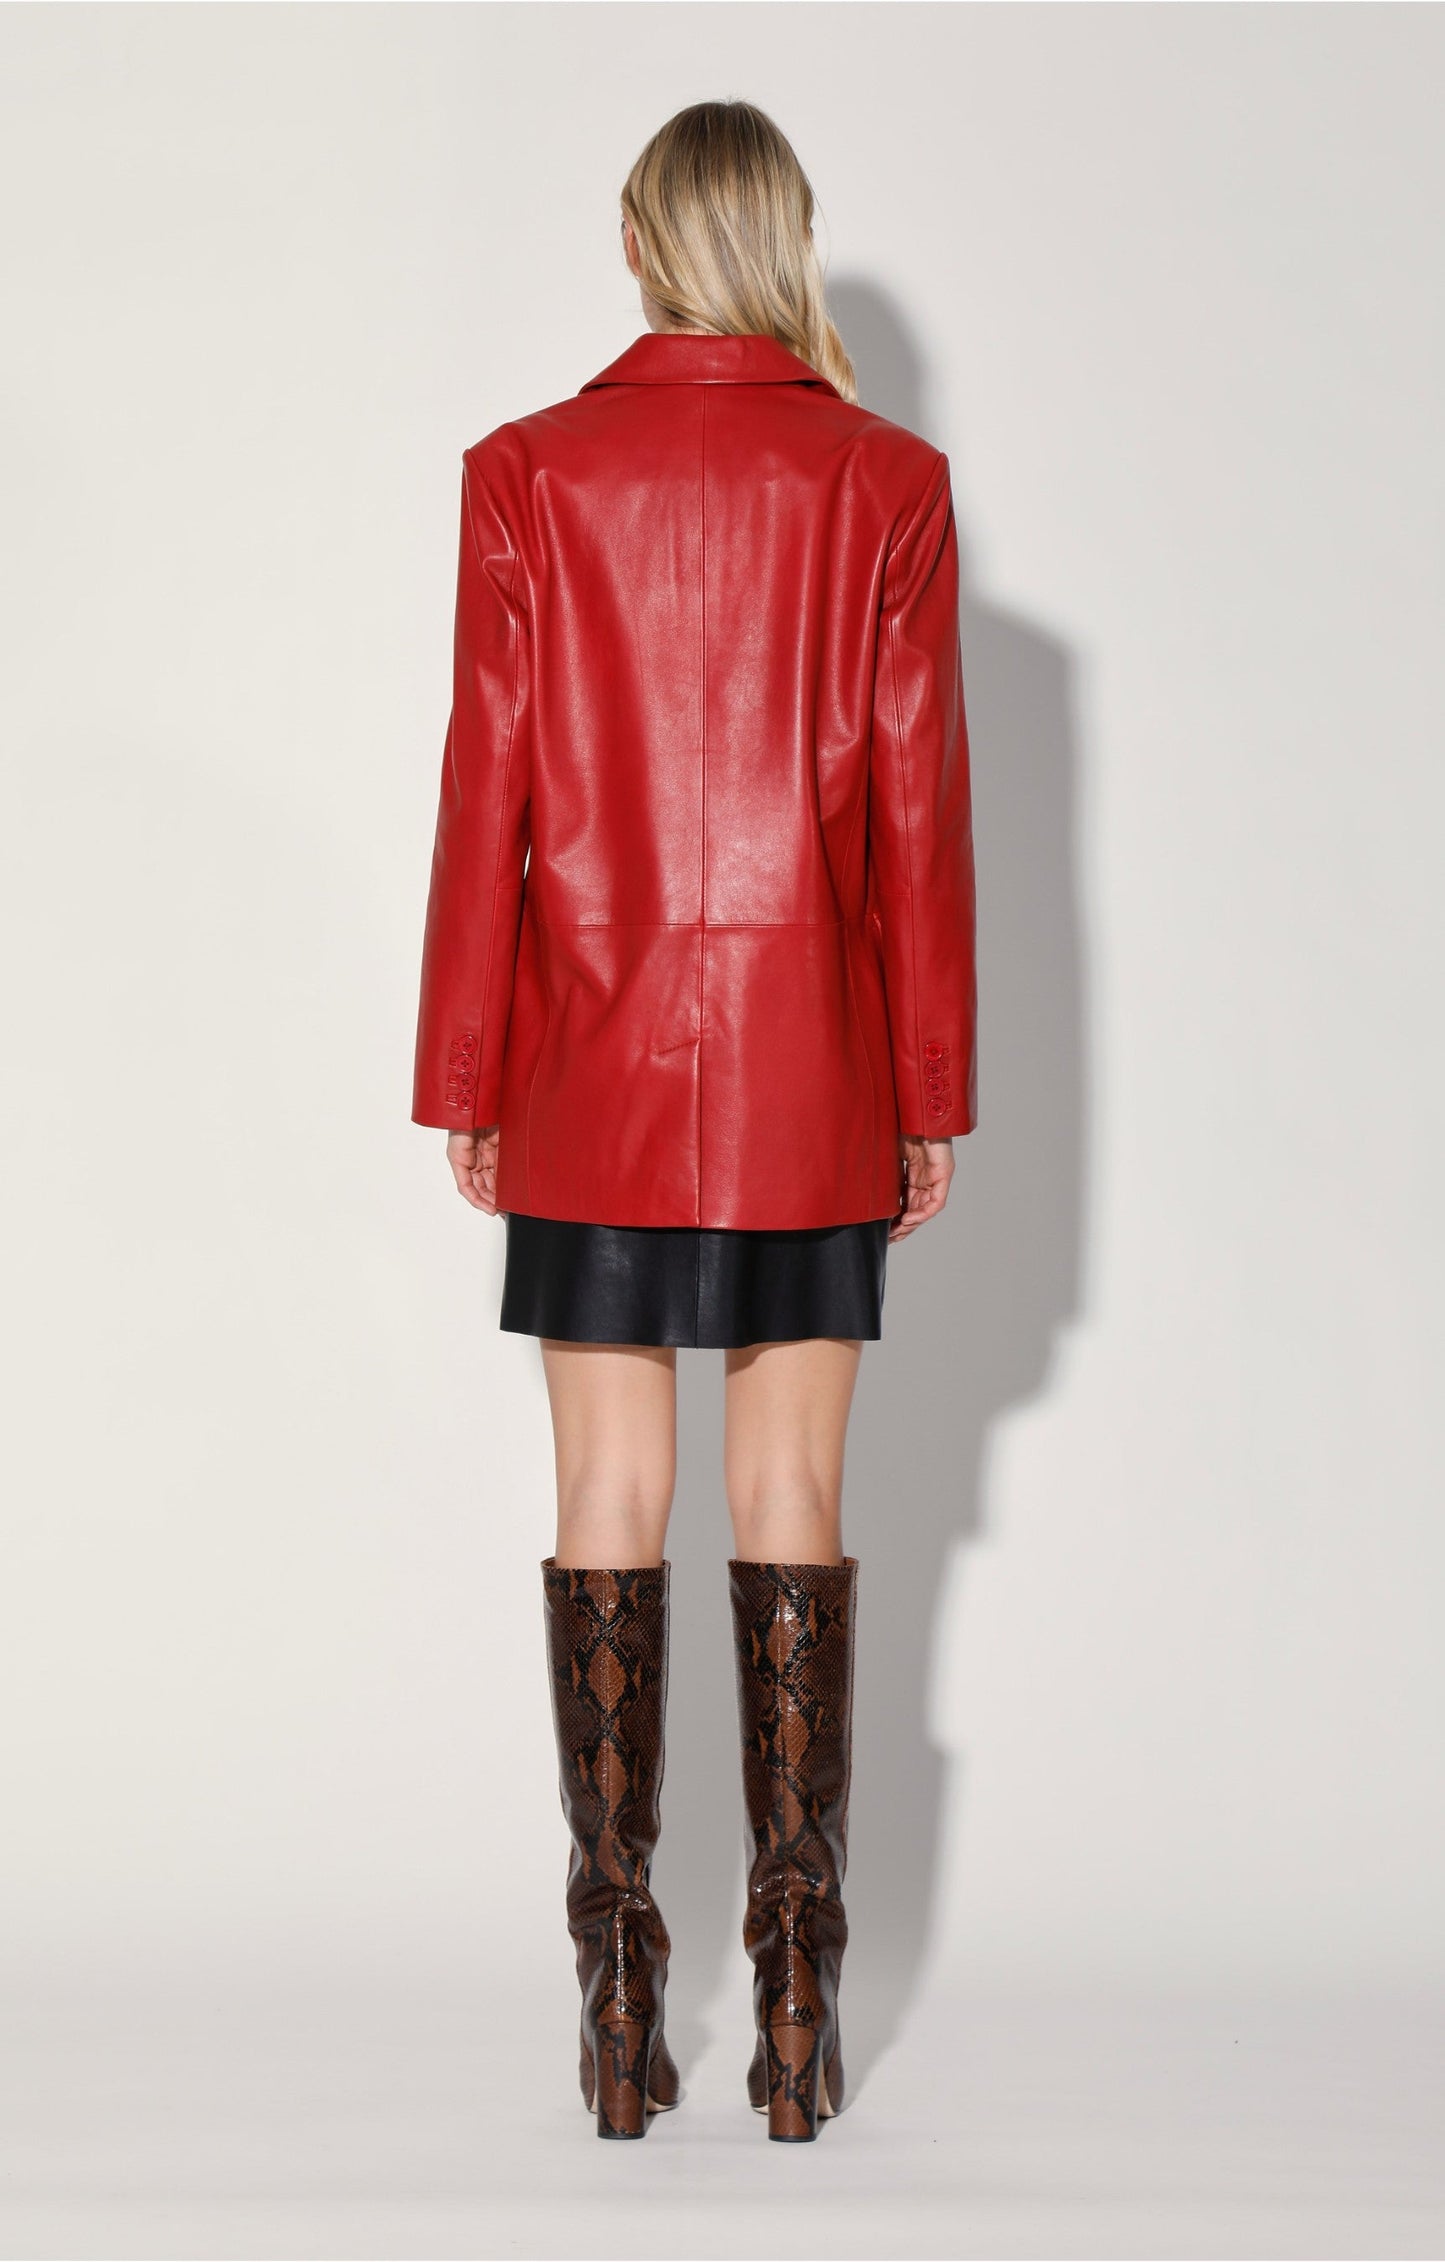 Kira Blazer, Red - Leather by Walter Baker